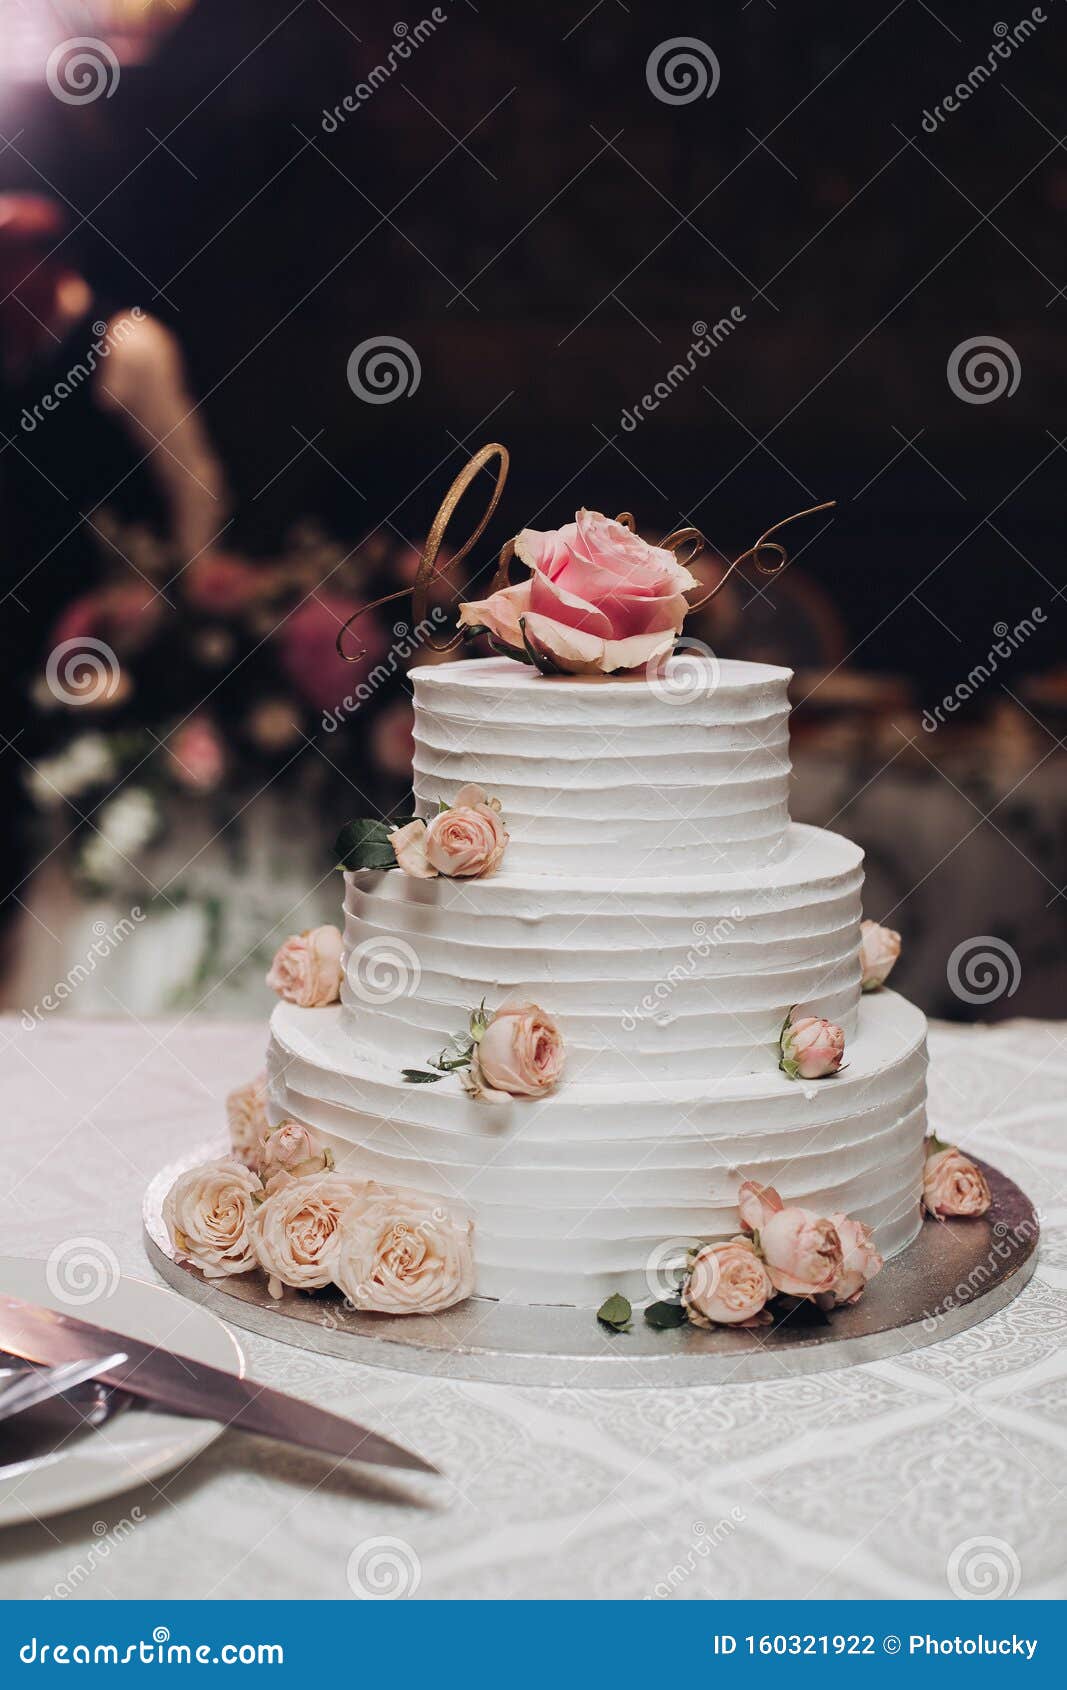 Pin by Niki Belles on Mom | Big birthday cake, Cake, Pretty birthday cakes